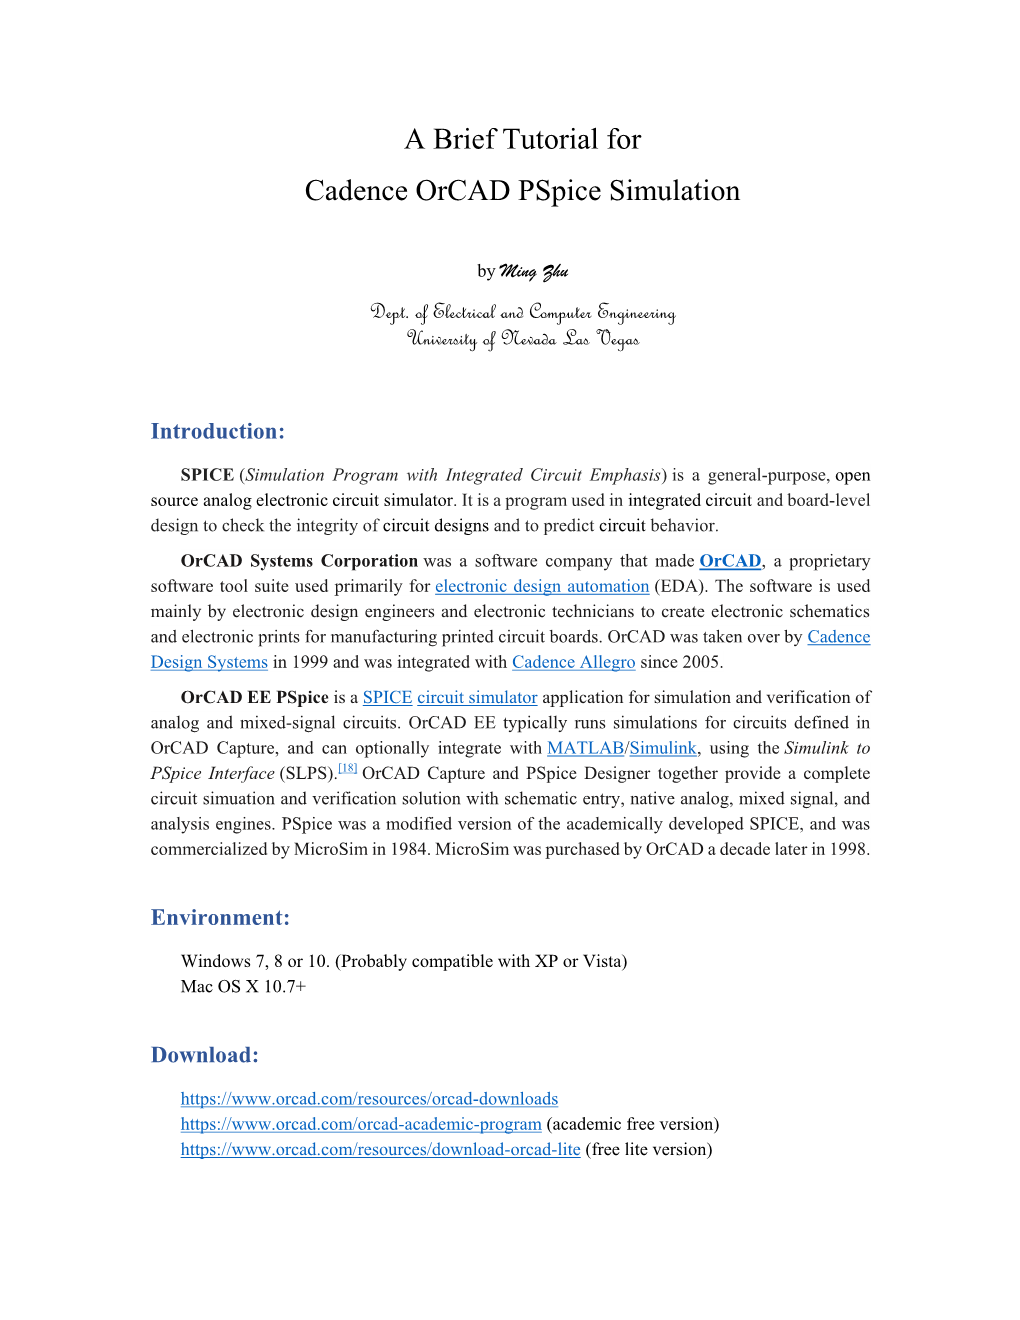 A Brief Tutorial for Cadence Orcad Pspice Simulation